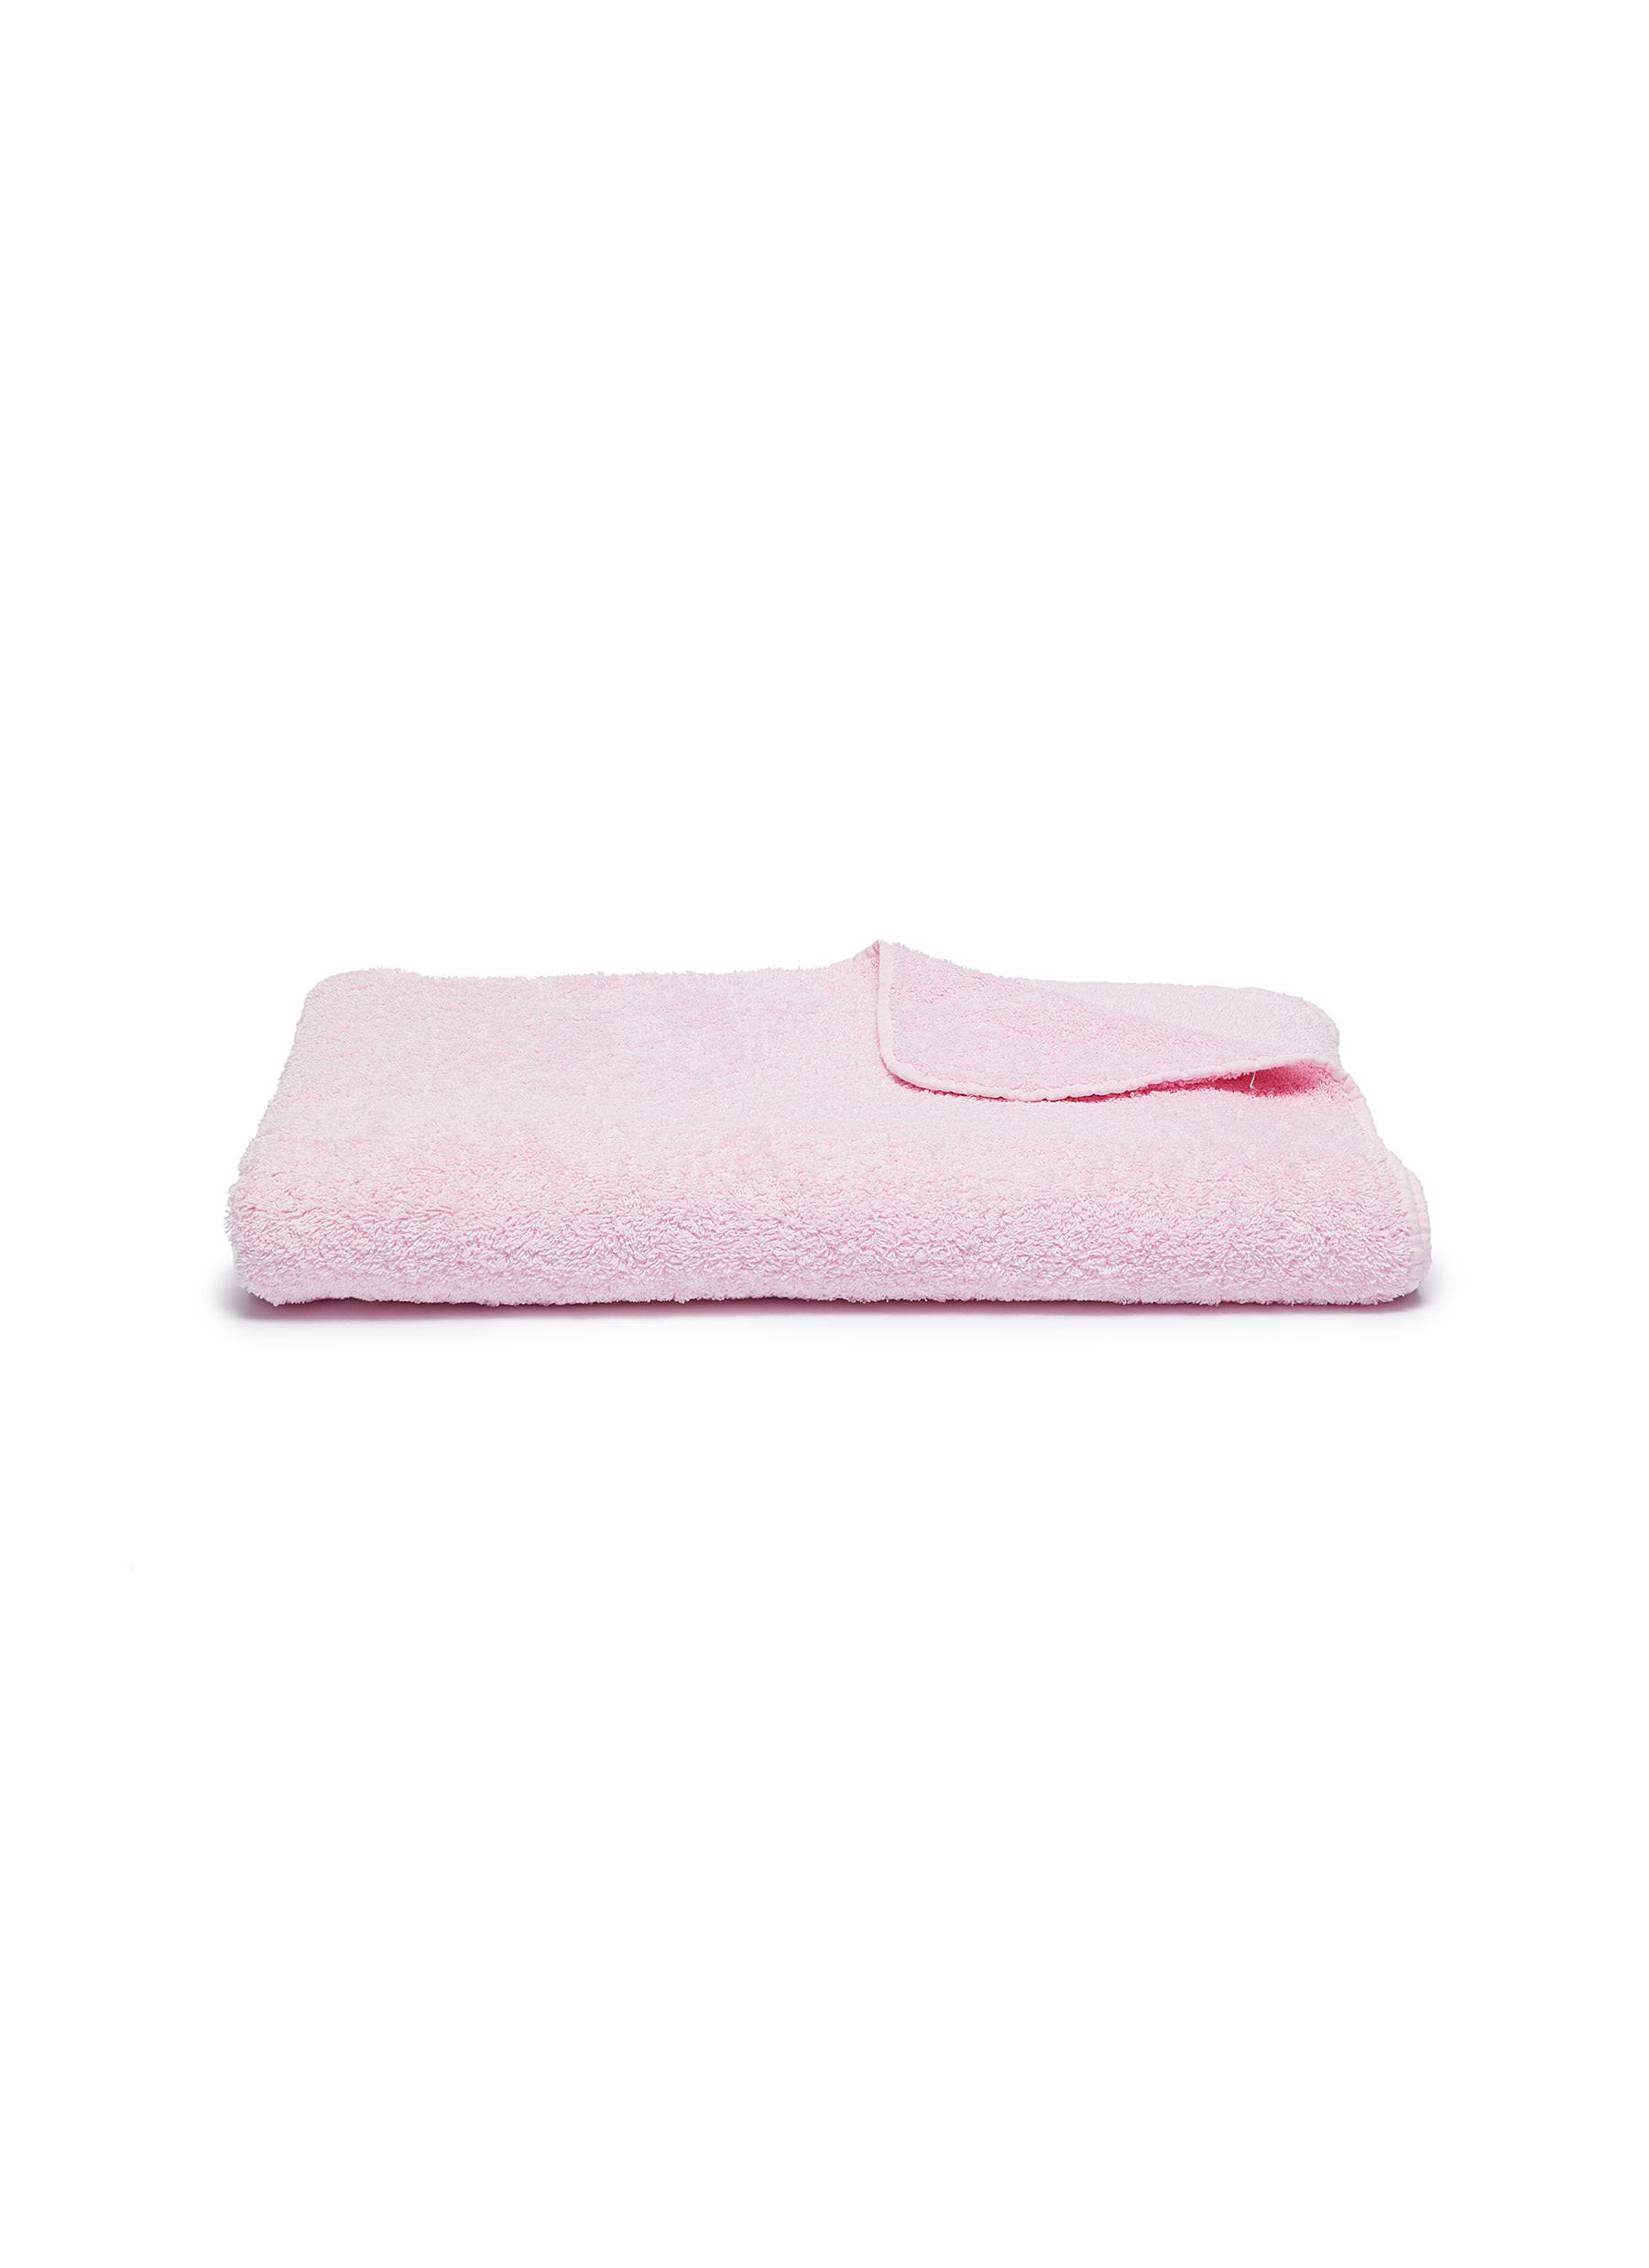 Abyss Super Pile Cotton Bath Sheet - Pink Lady